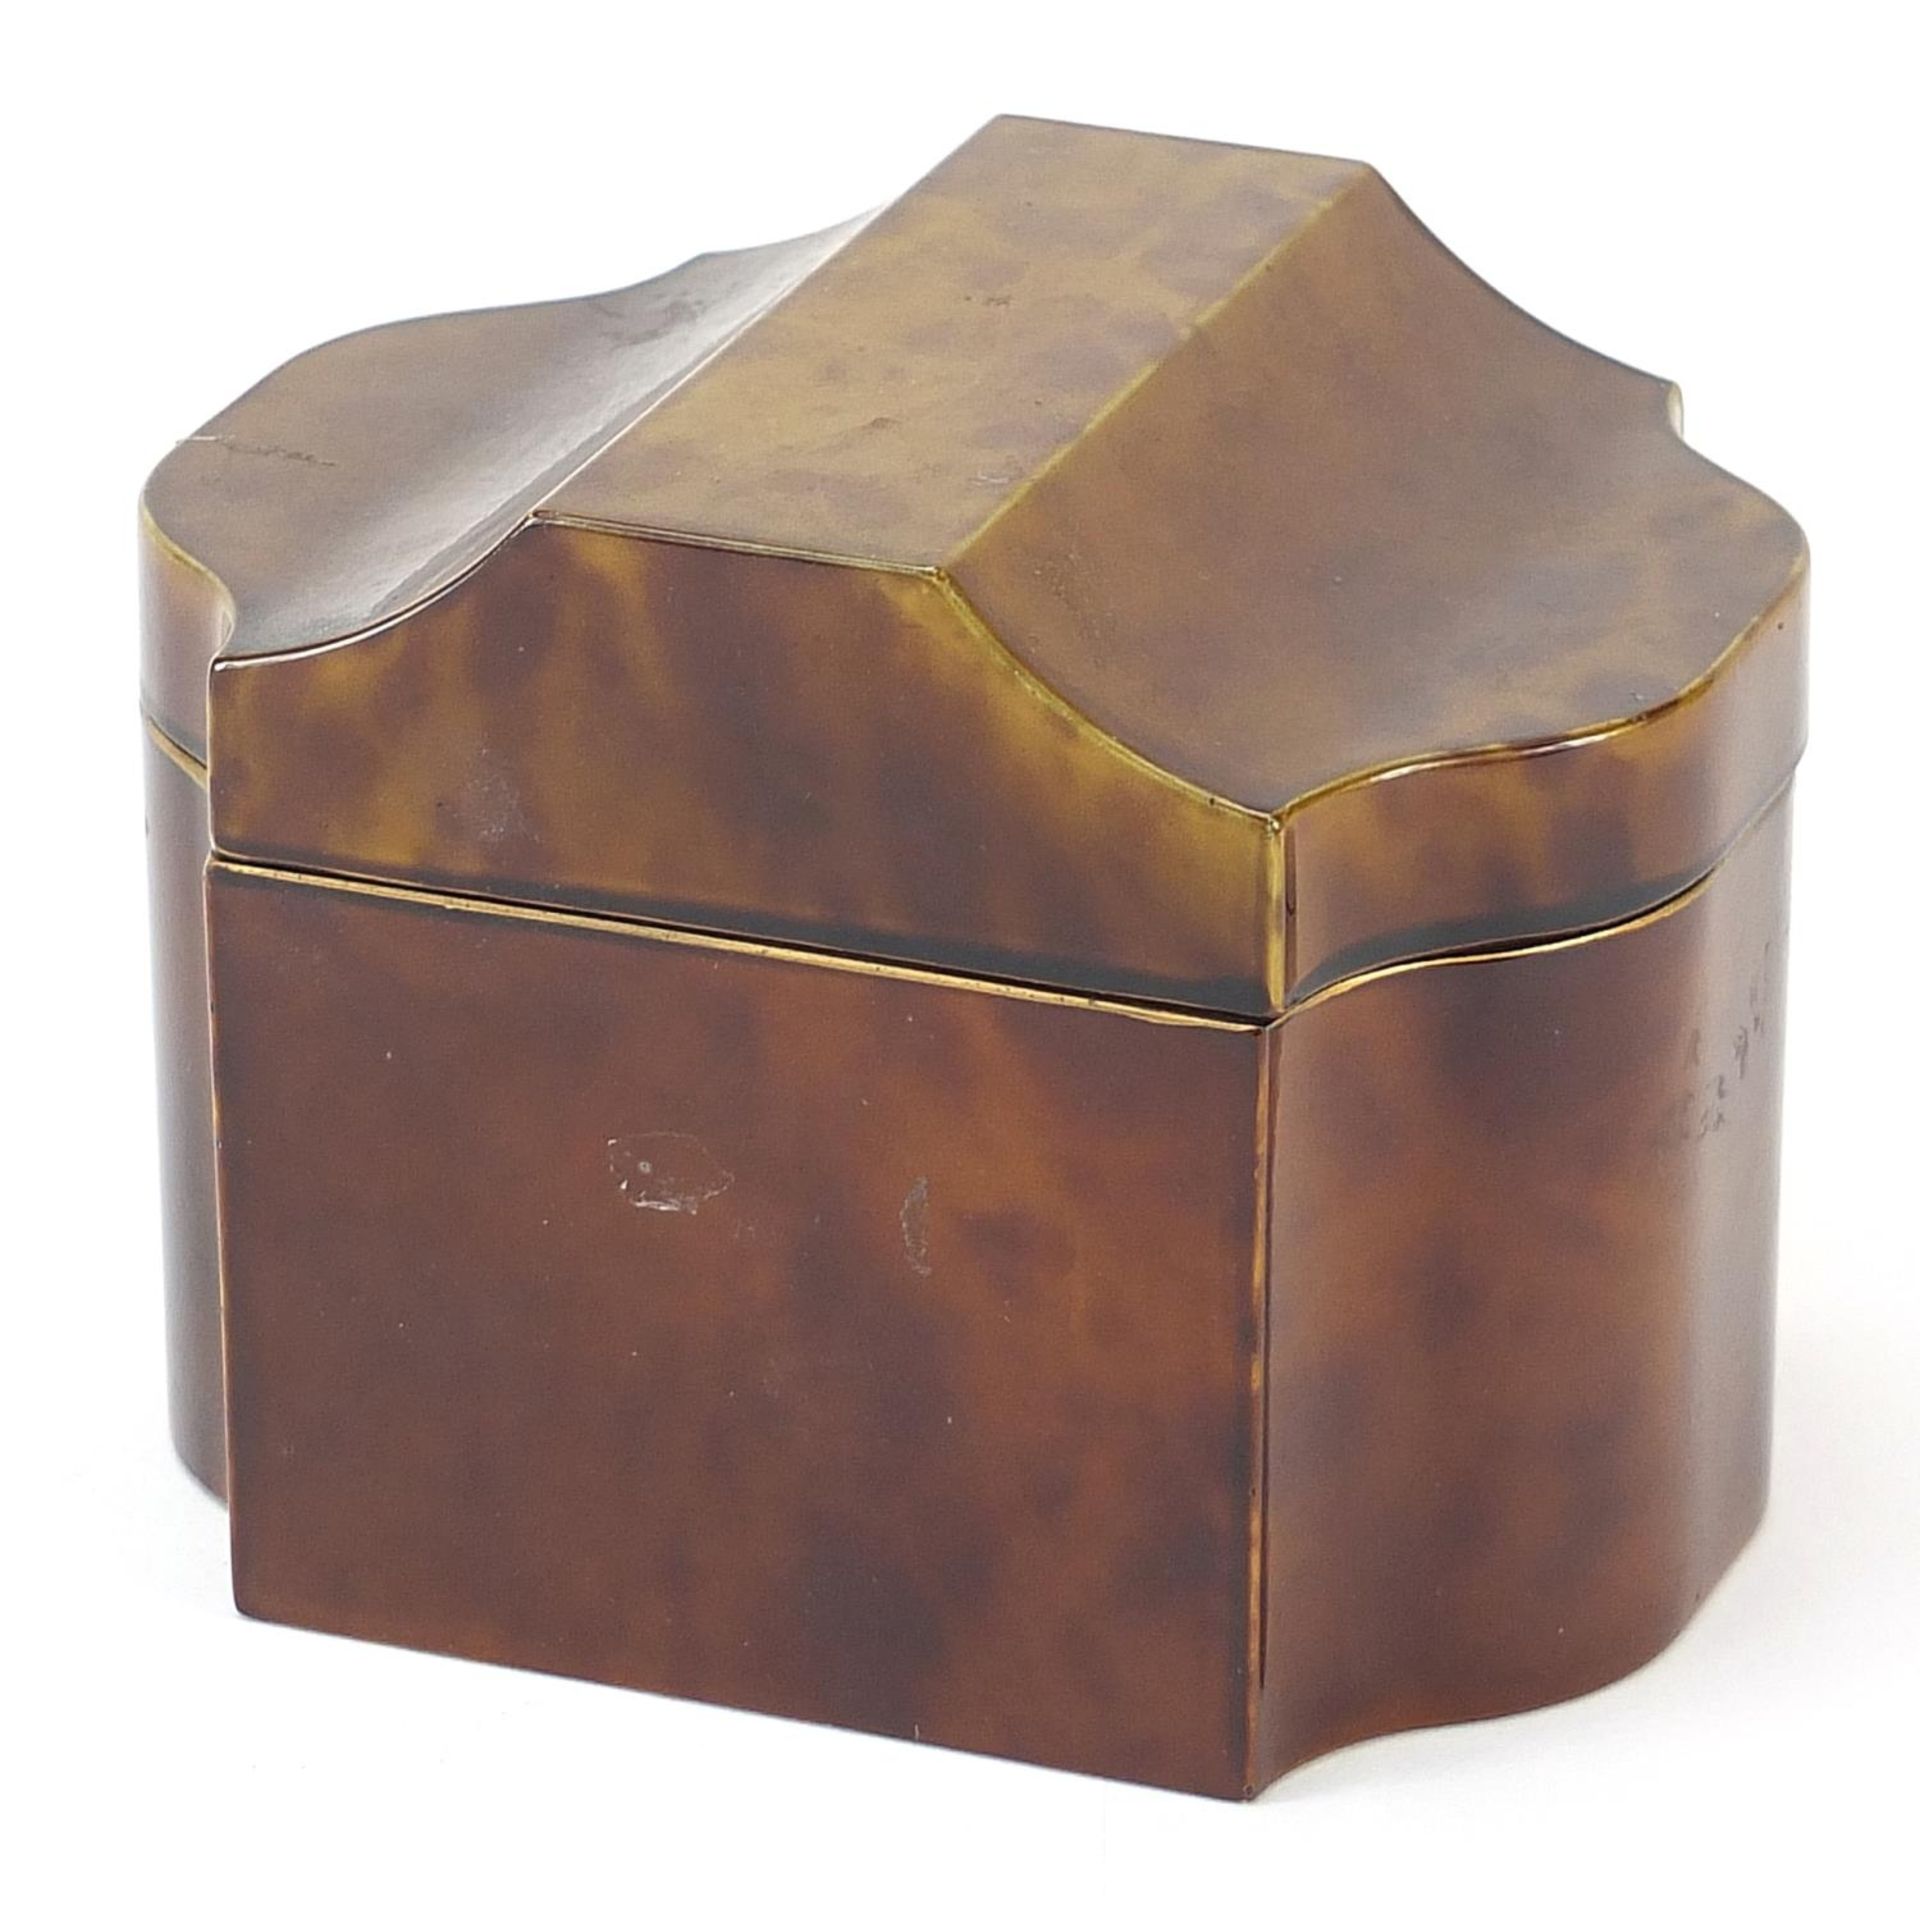 Faux tortoiseshell box and cover, 9cm H x 12cm W x 9cm D